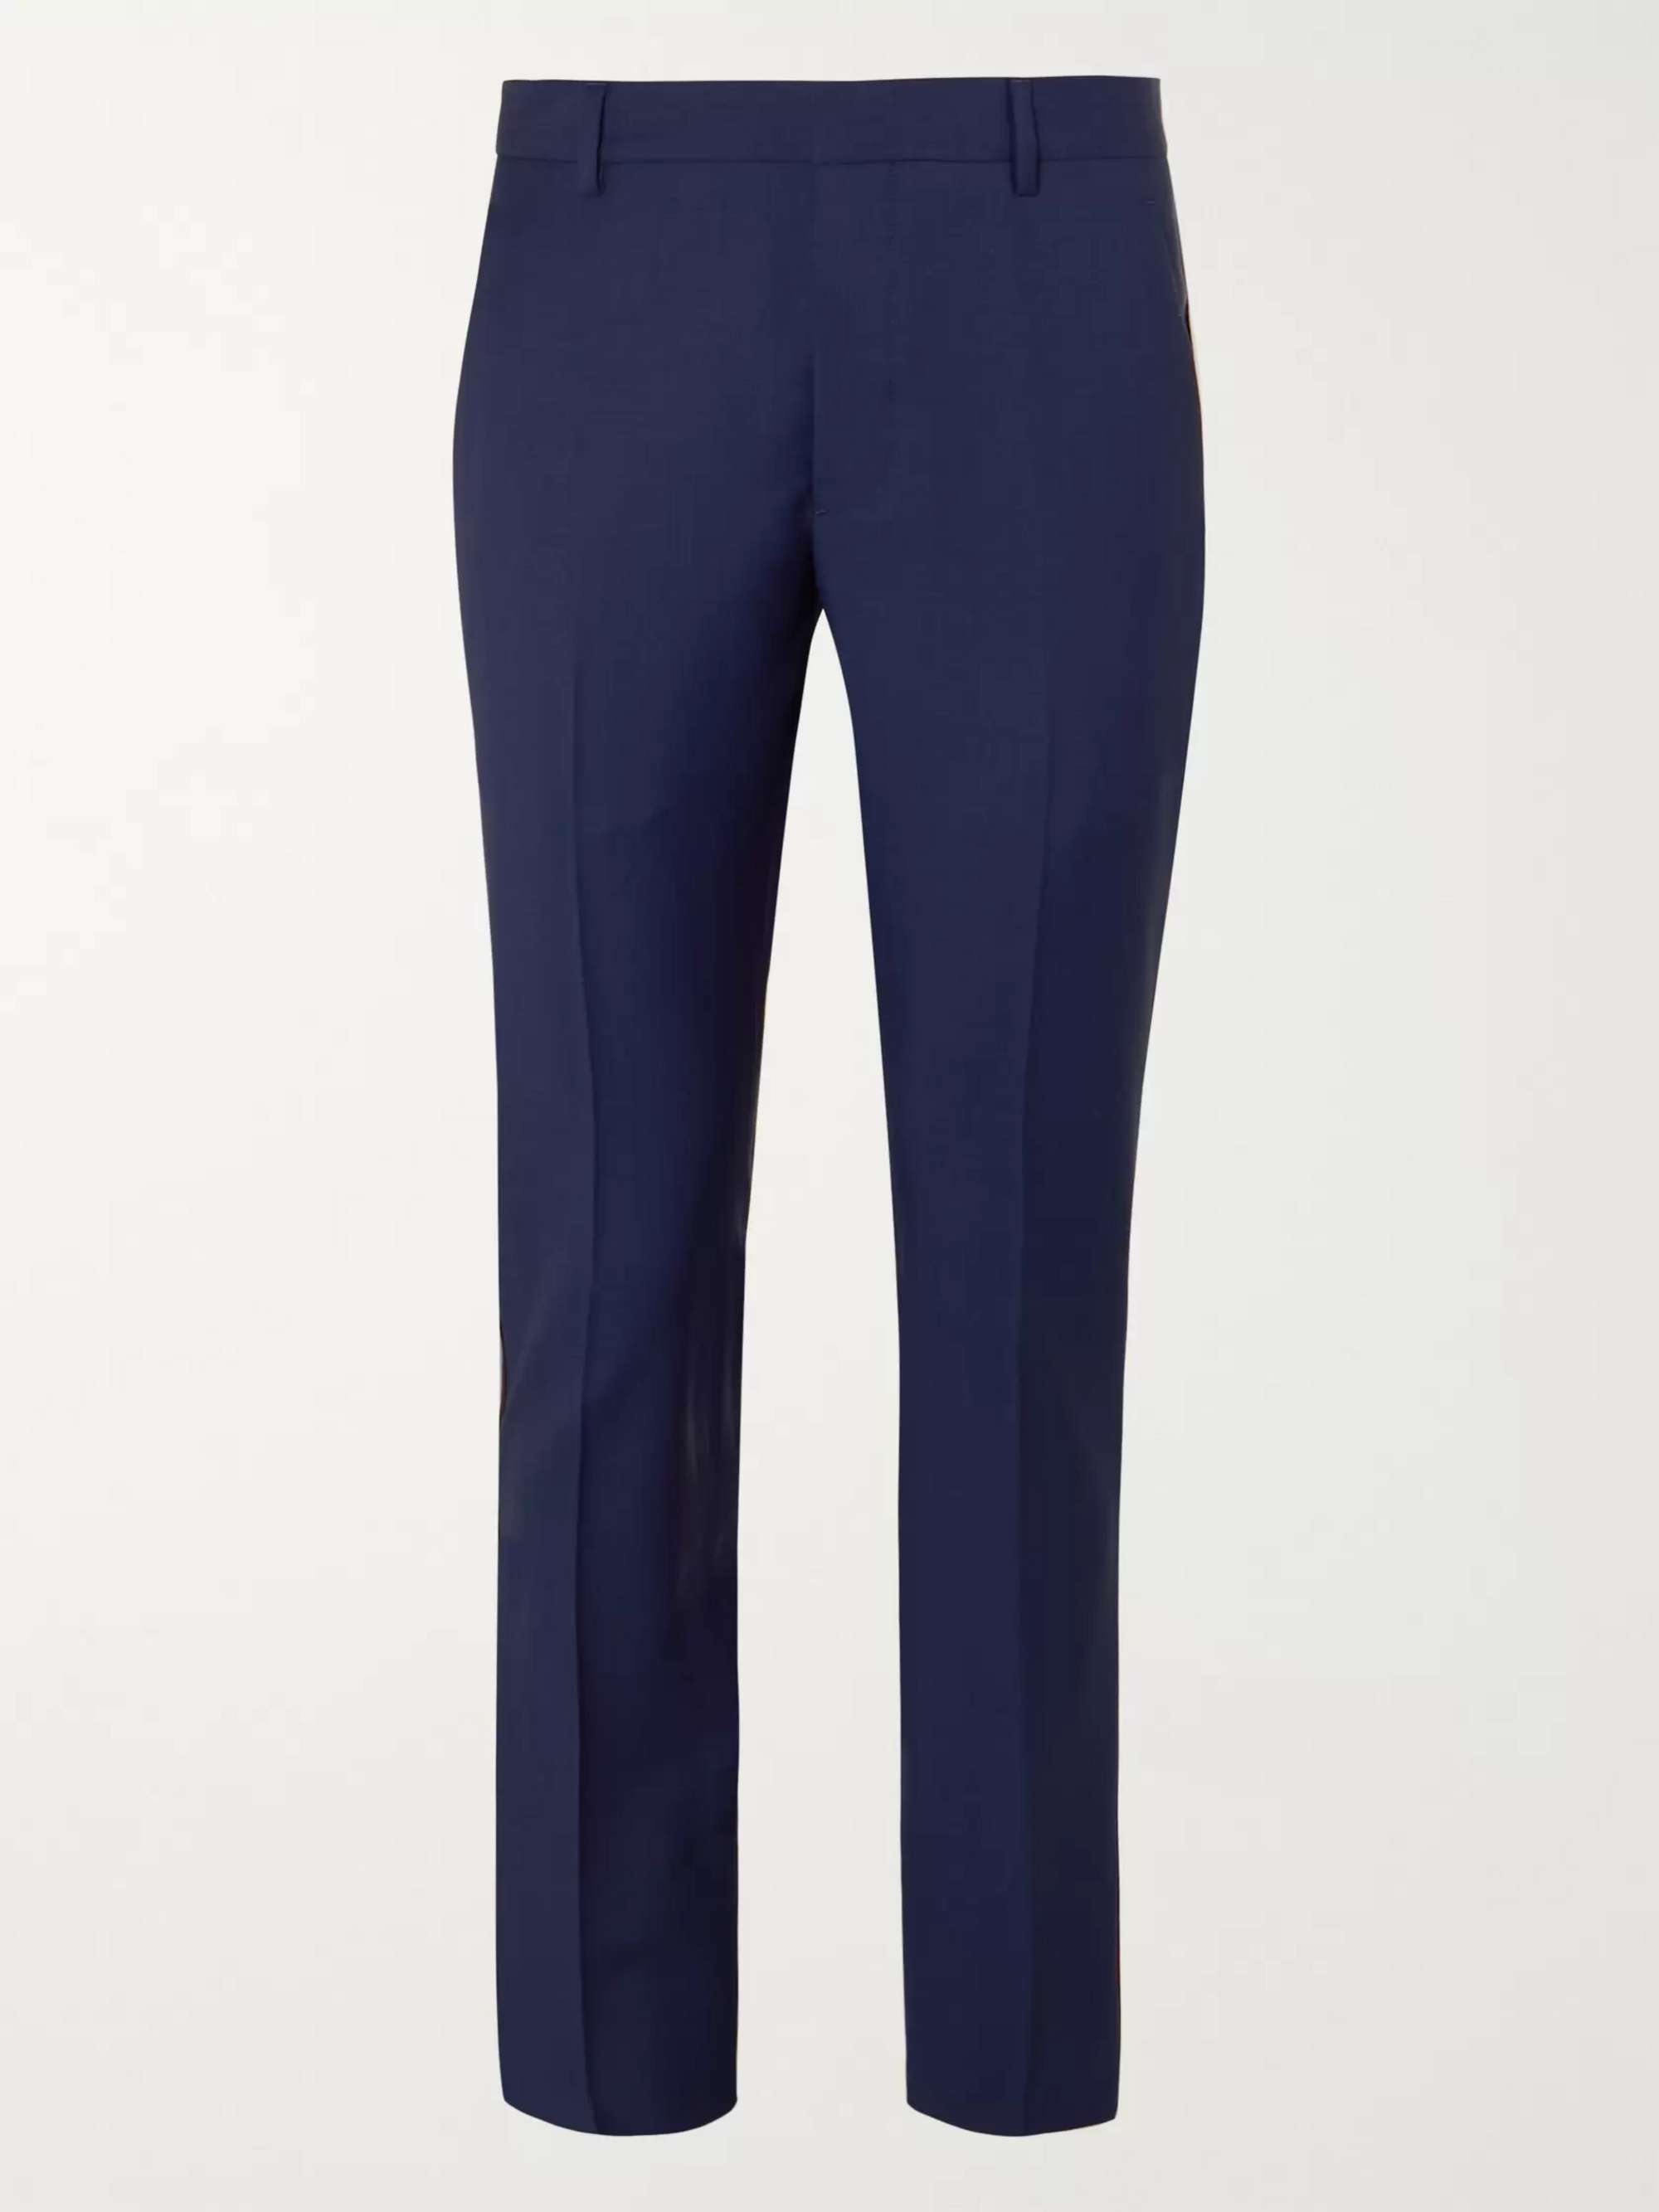 PRADA Navy Slim-Fit Tapered Webbing-Trimmed Virgin Wool and Mohair-Blend Trousers